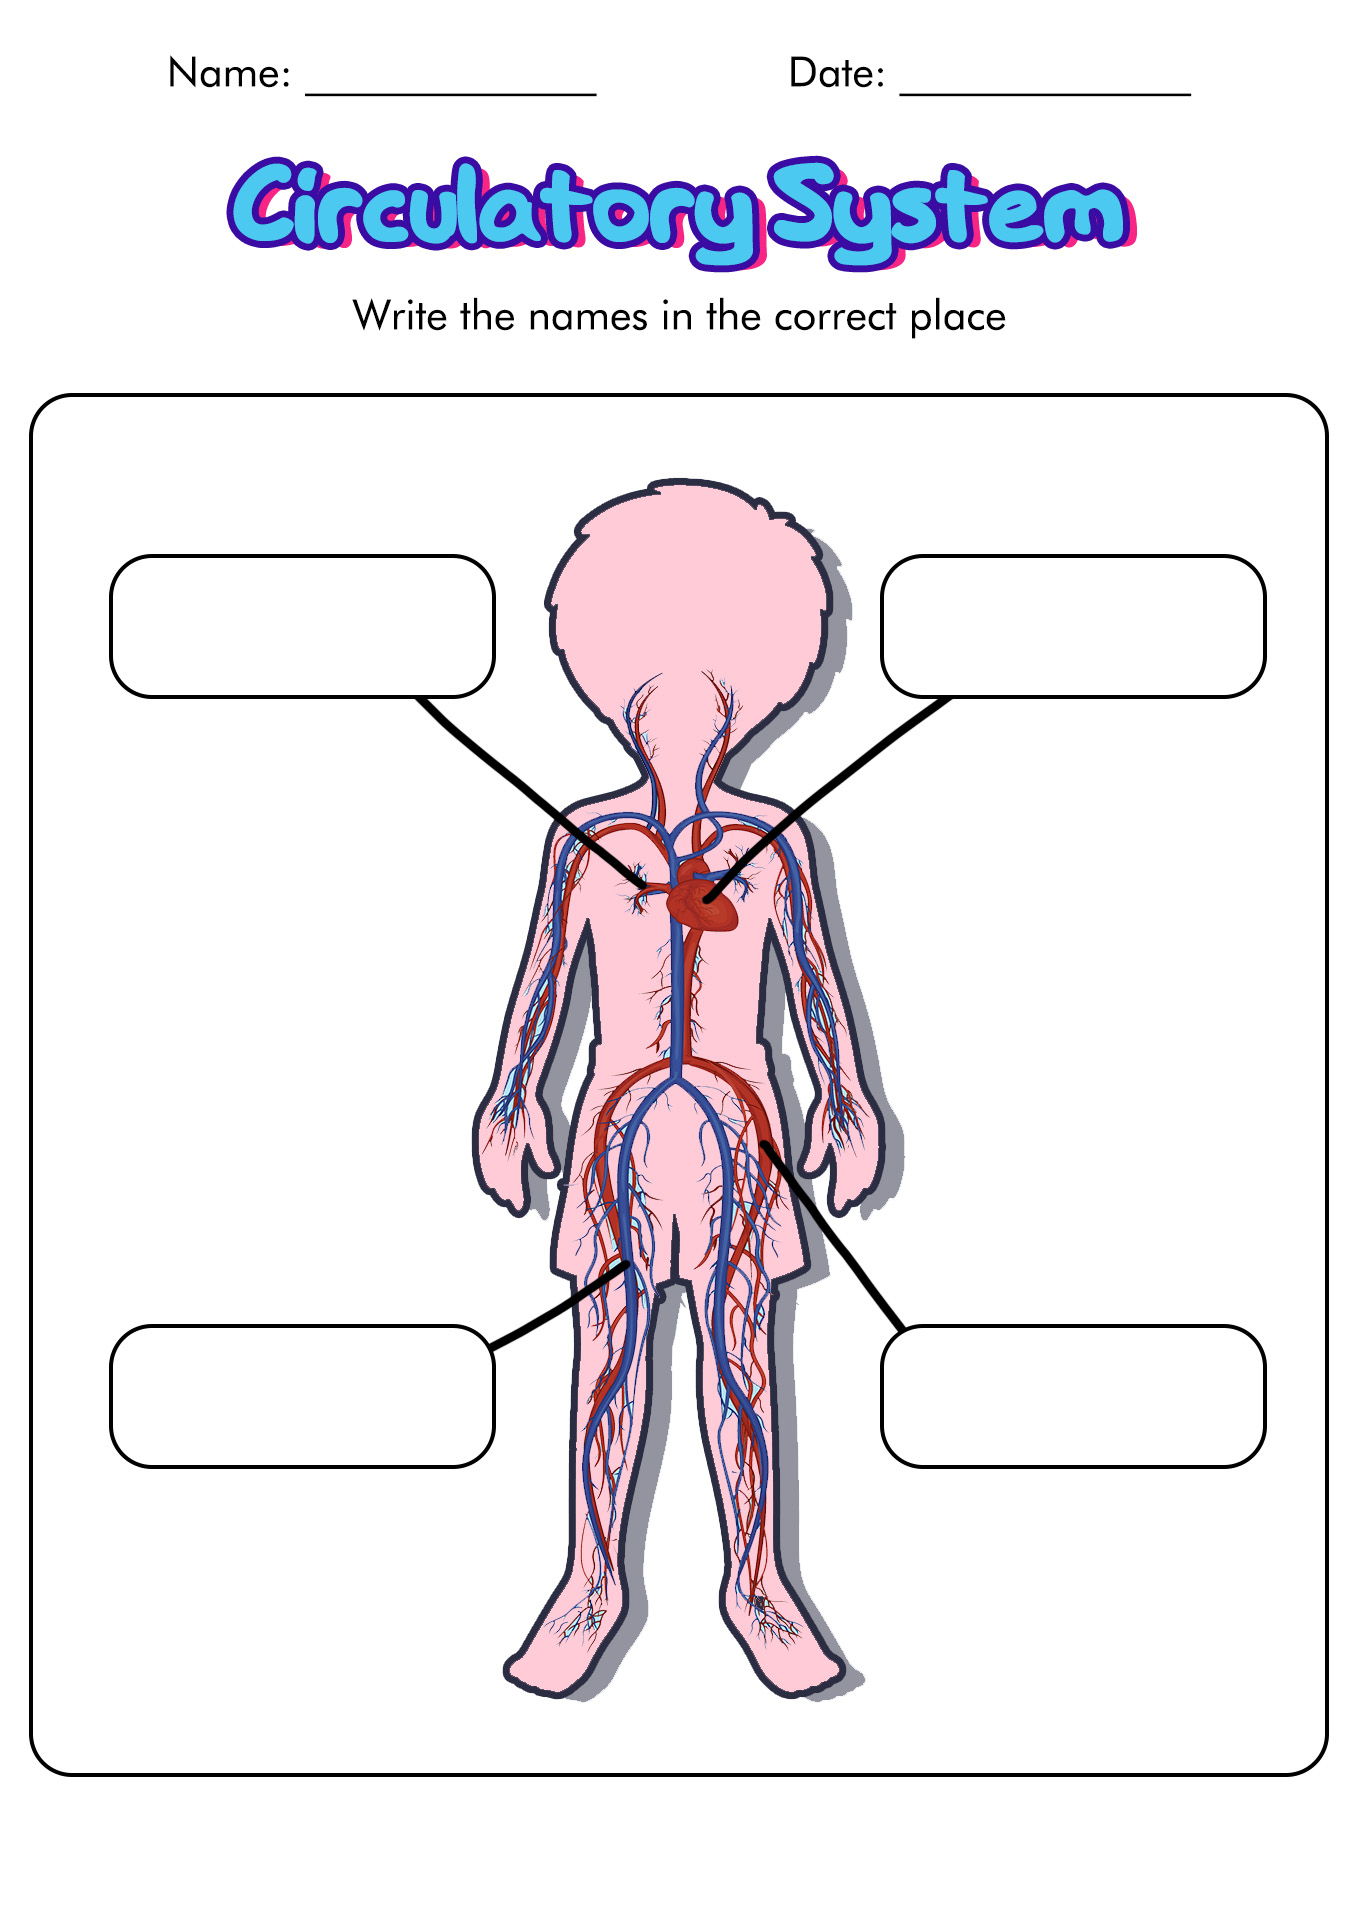 Circulatory System Worksheets for Kids Image